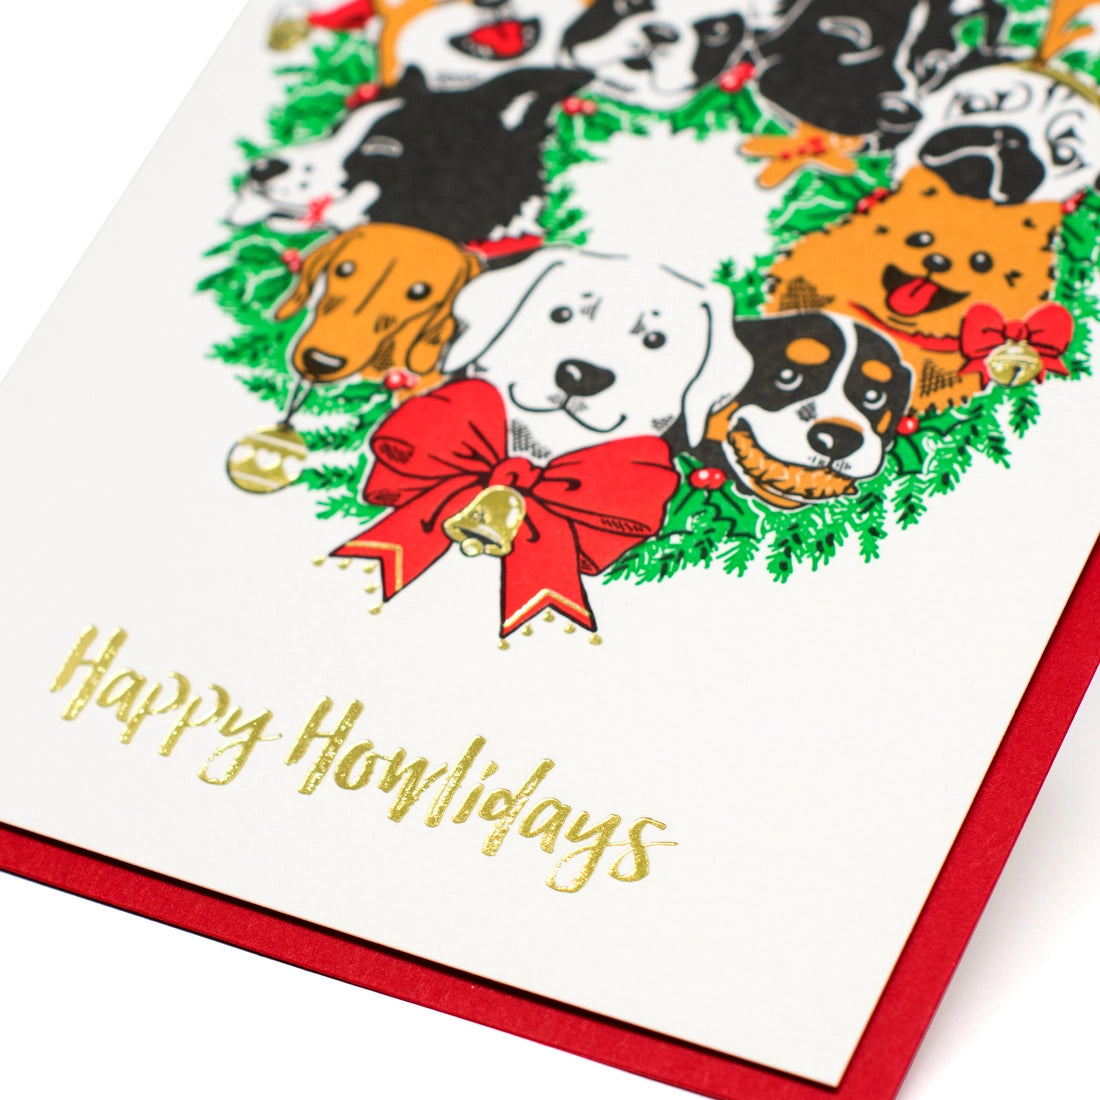 Dog-themed Greeting Card - Happy Howlidays - Dog Christmas Wreath